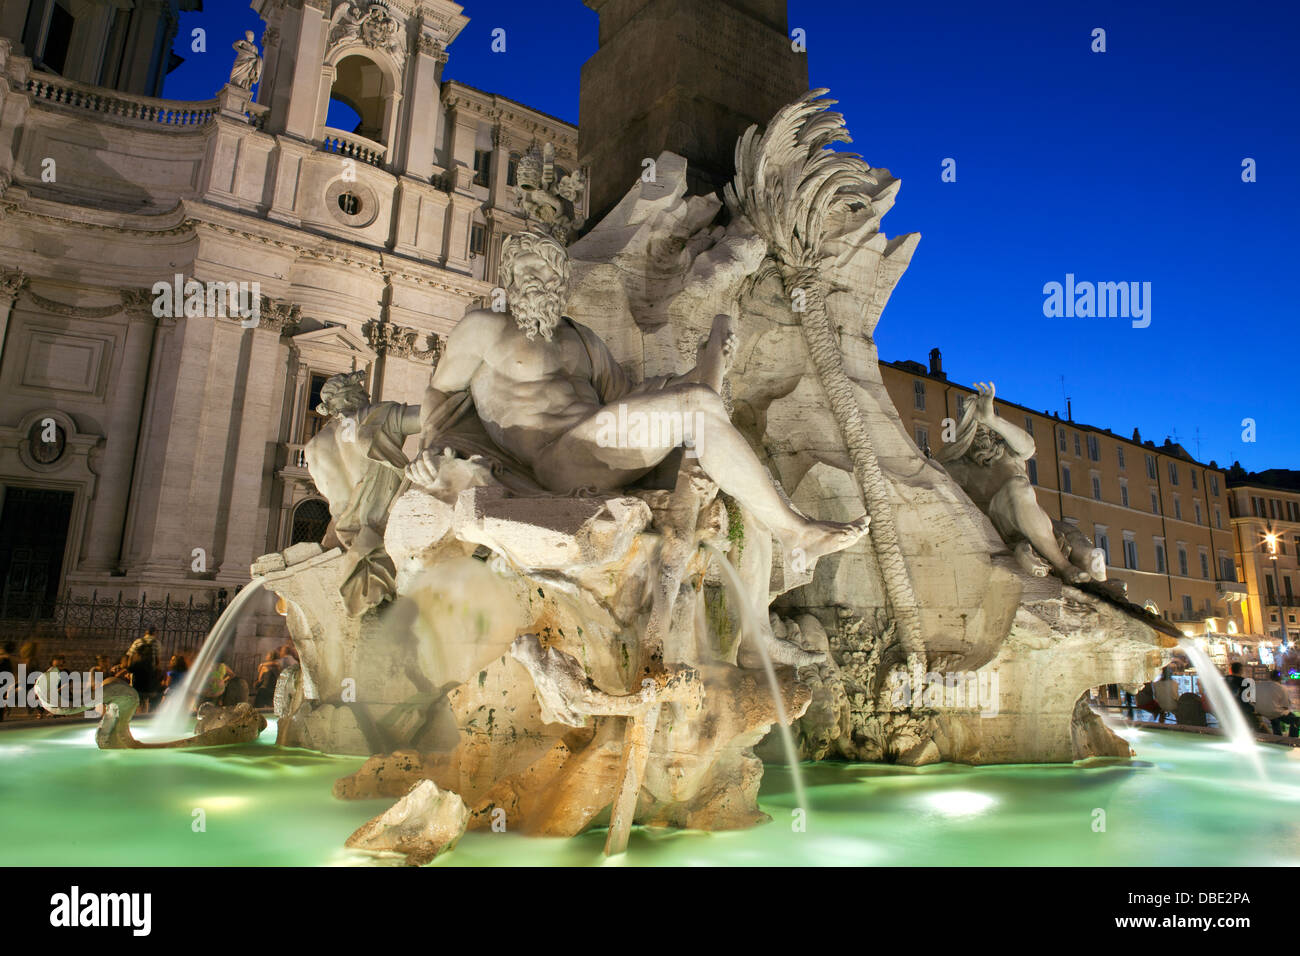 Piazza Navona, Rom. Brunnen der vier Flüsse, Bernini, Barock, XVII Jahrhundert. Stockfoto